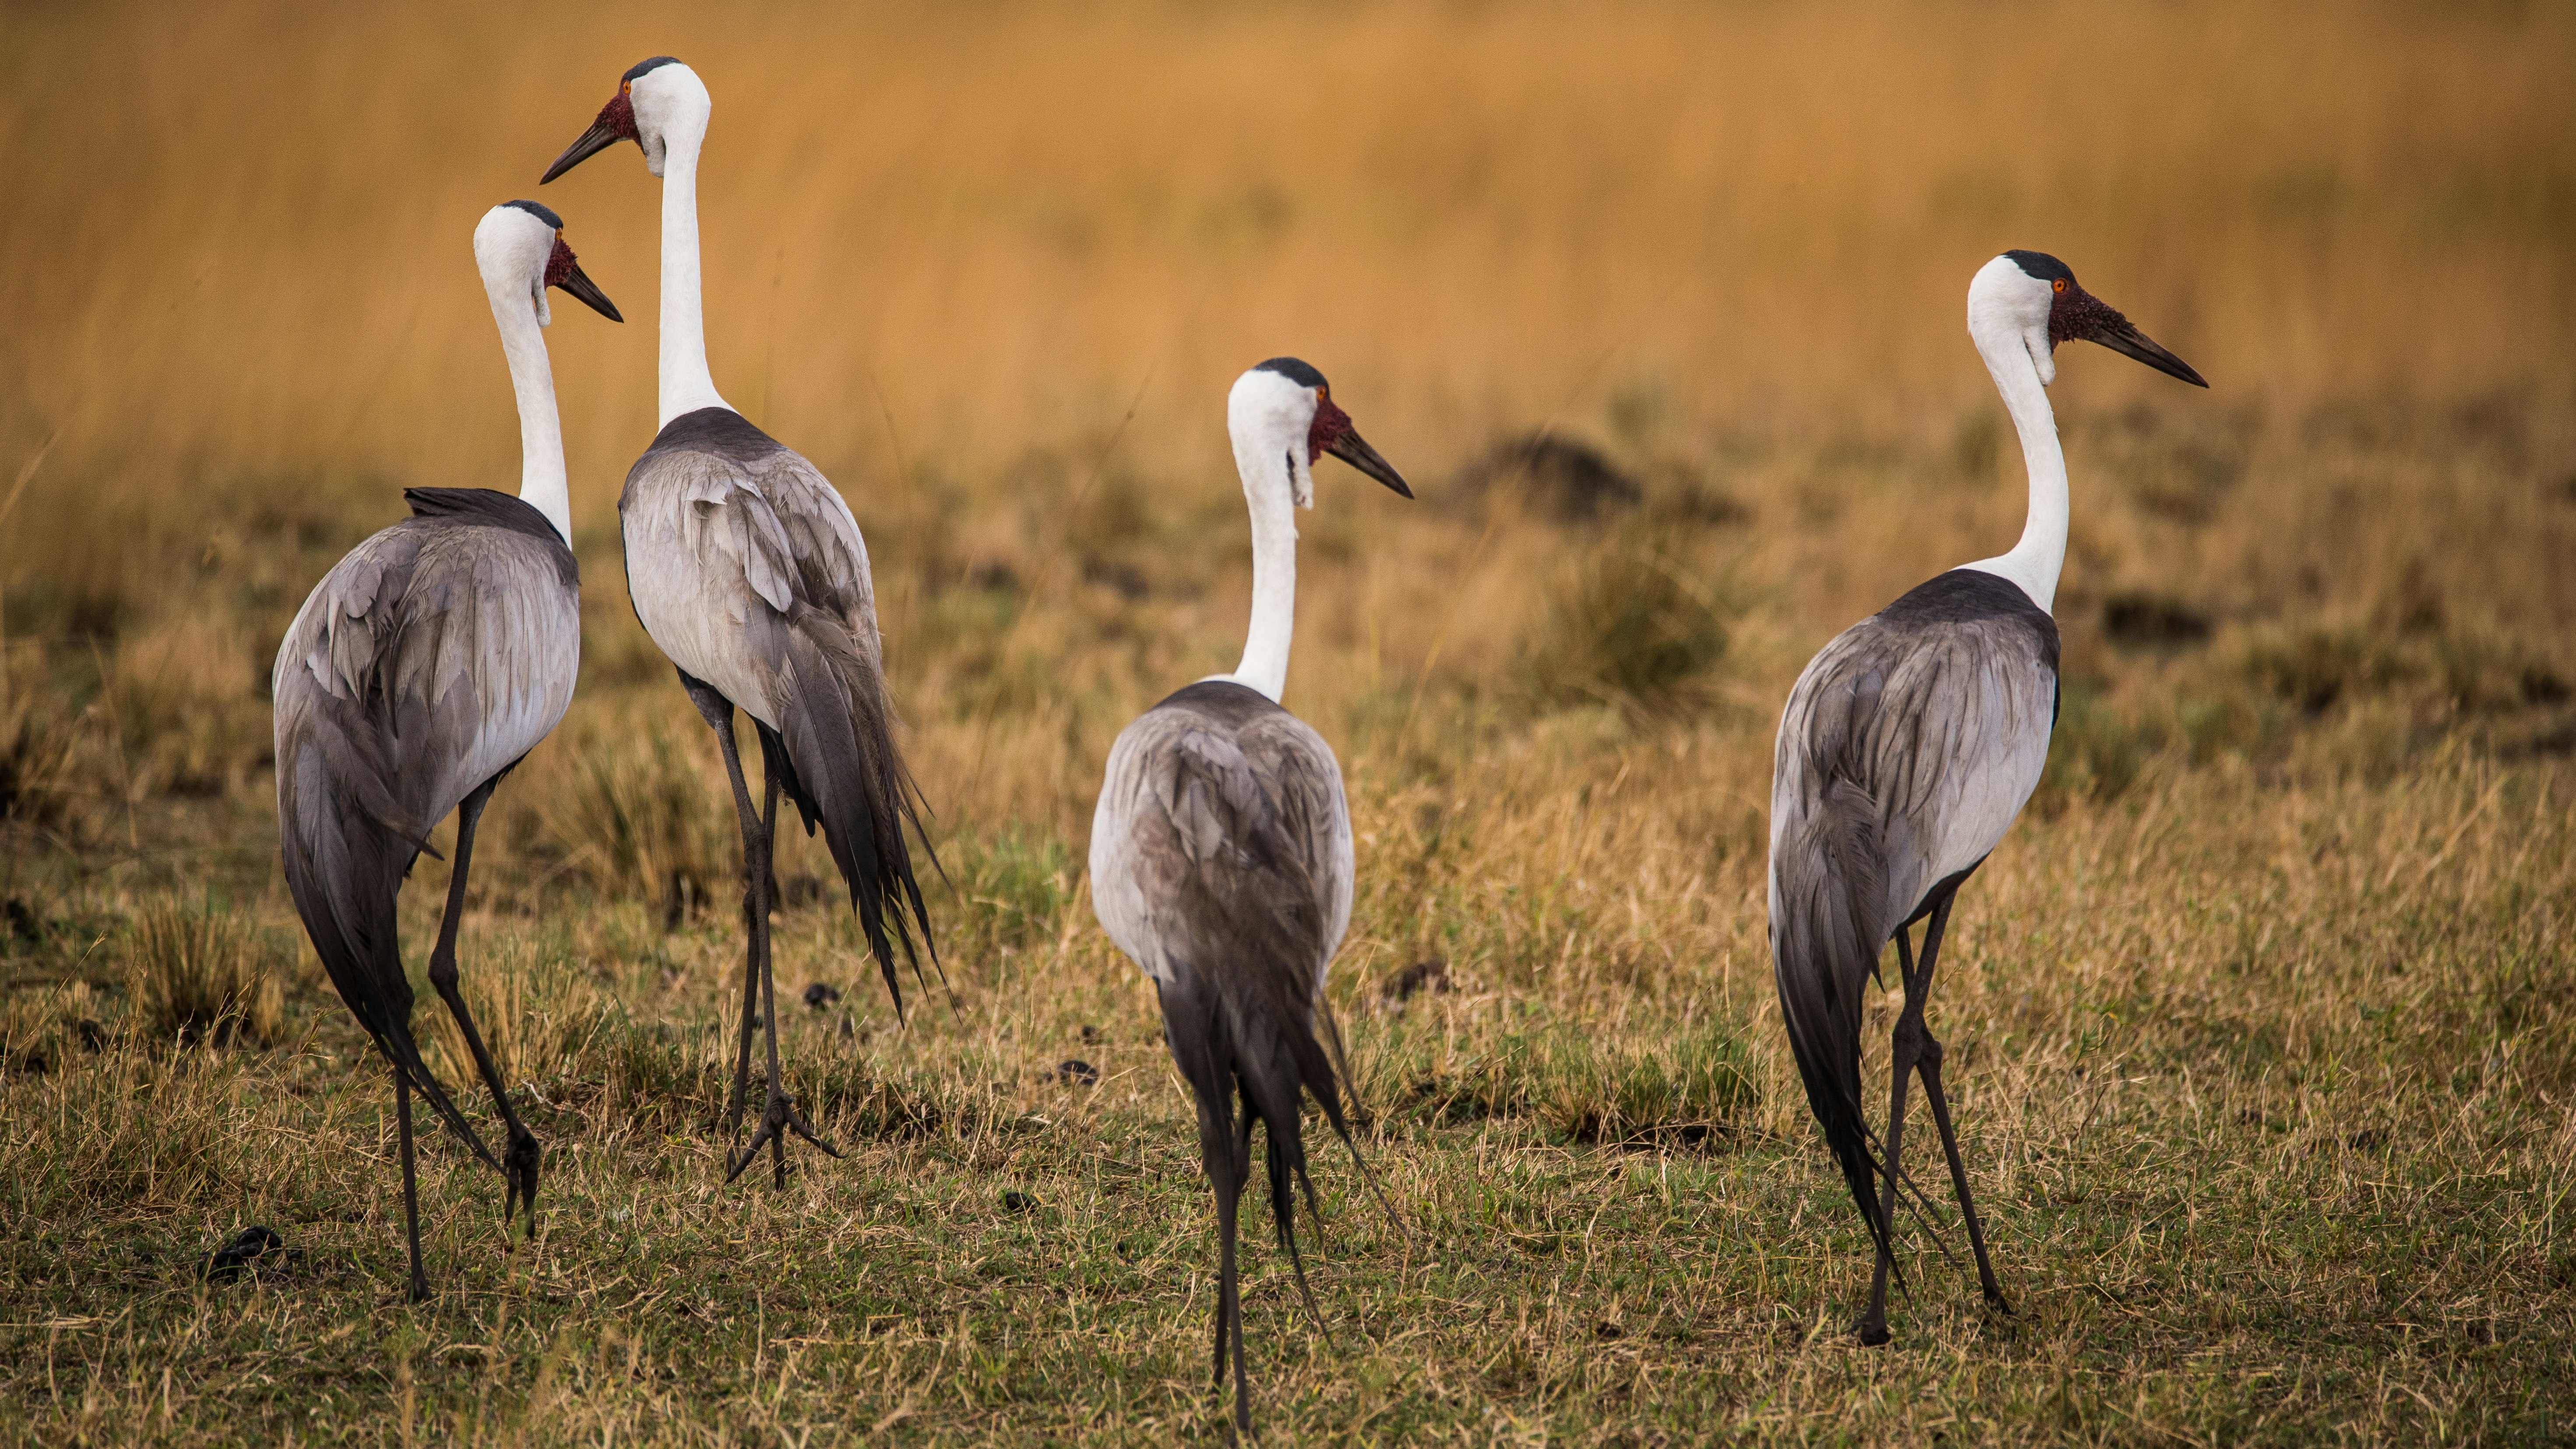 Cranes in the african savannah